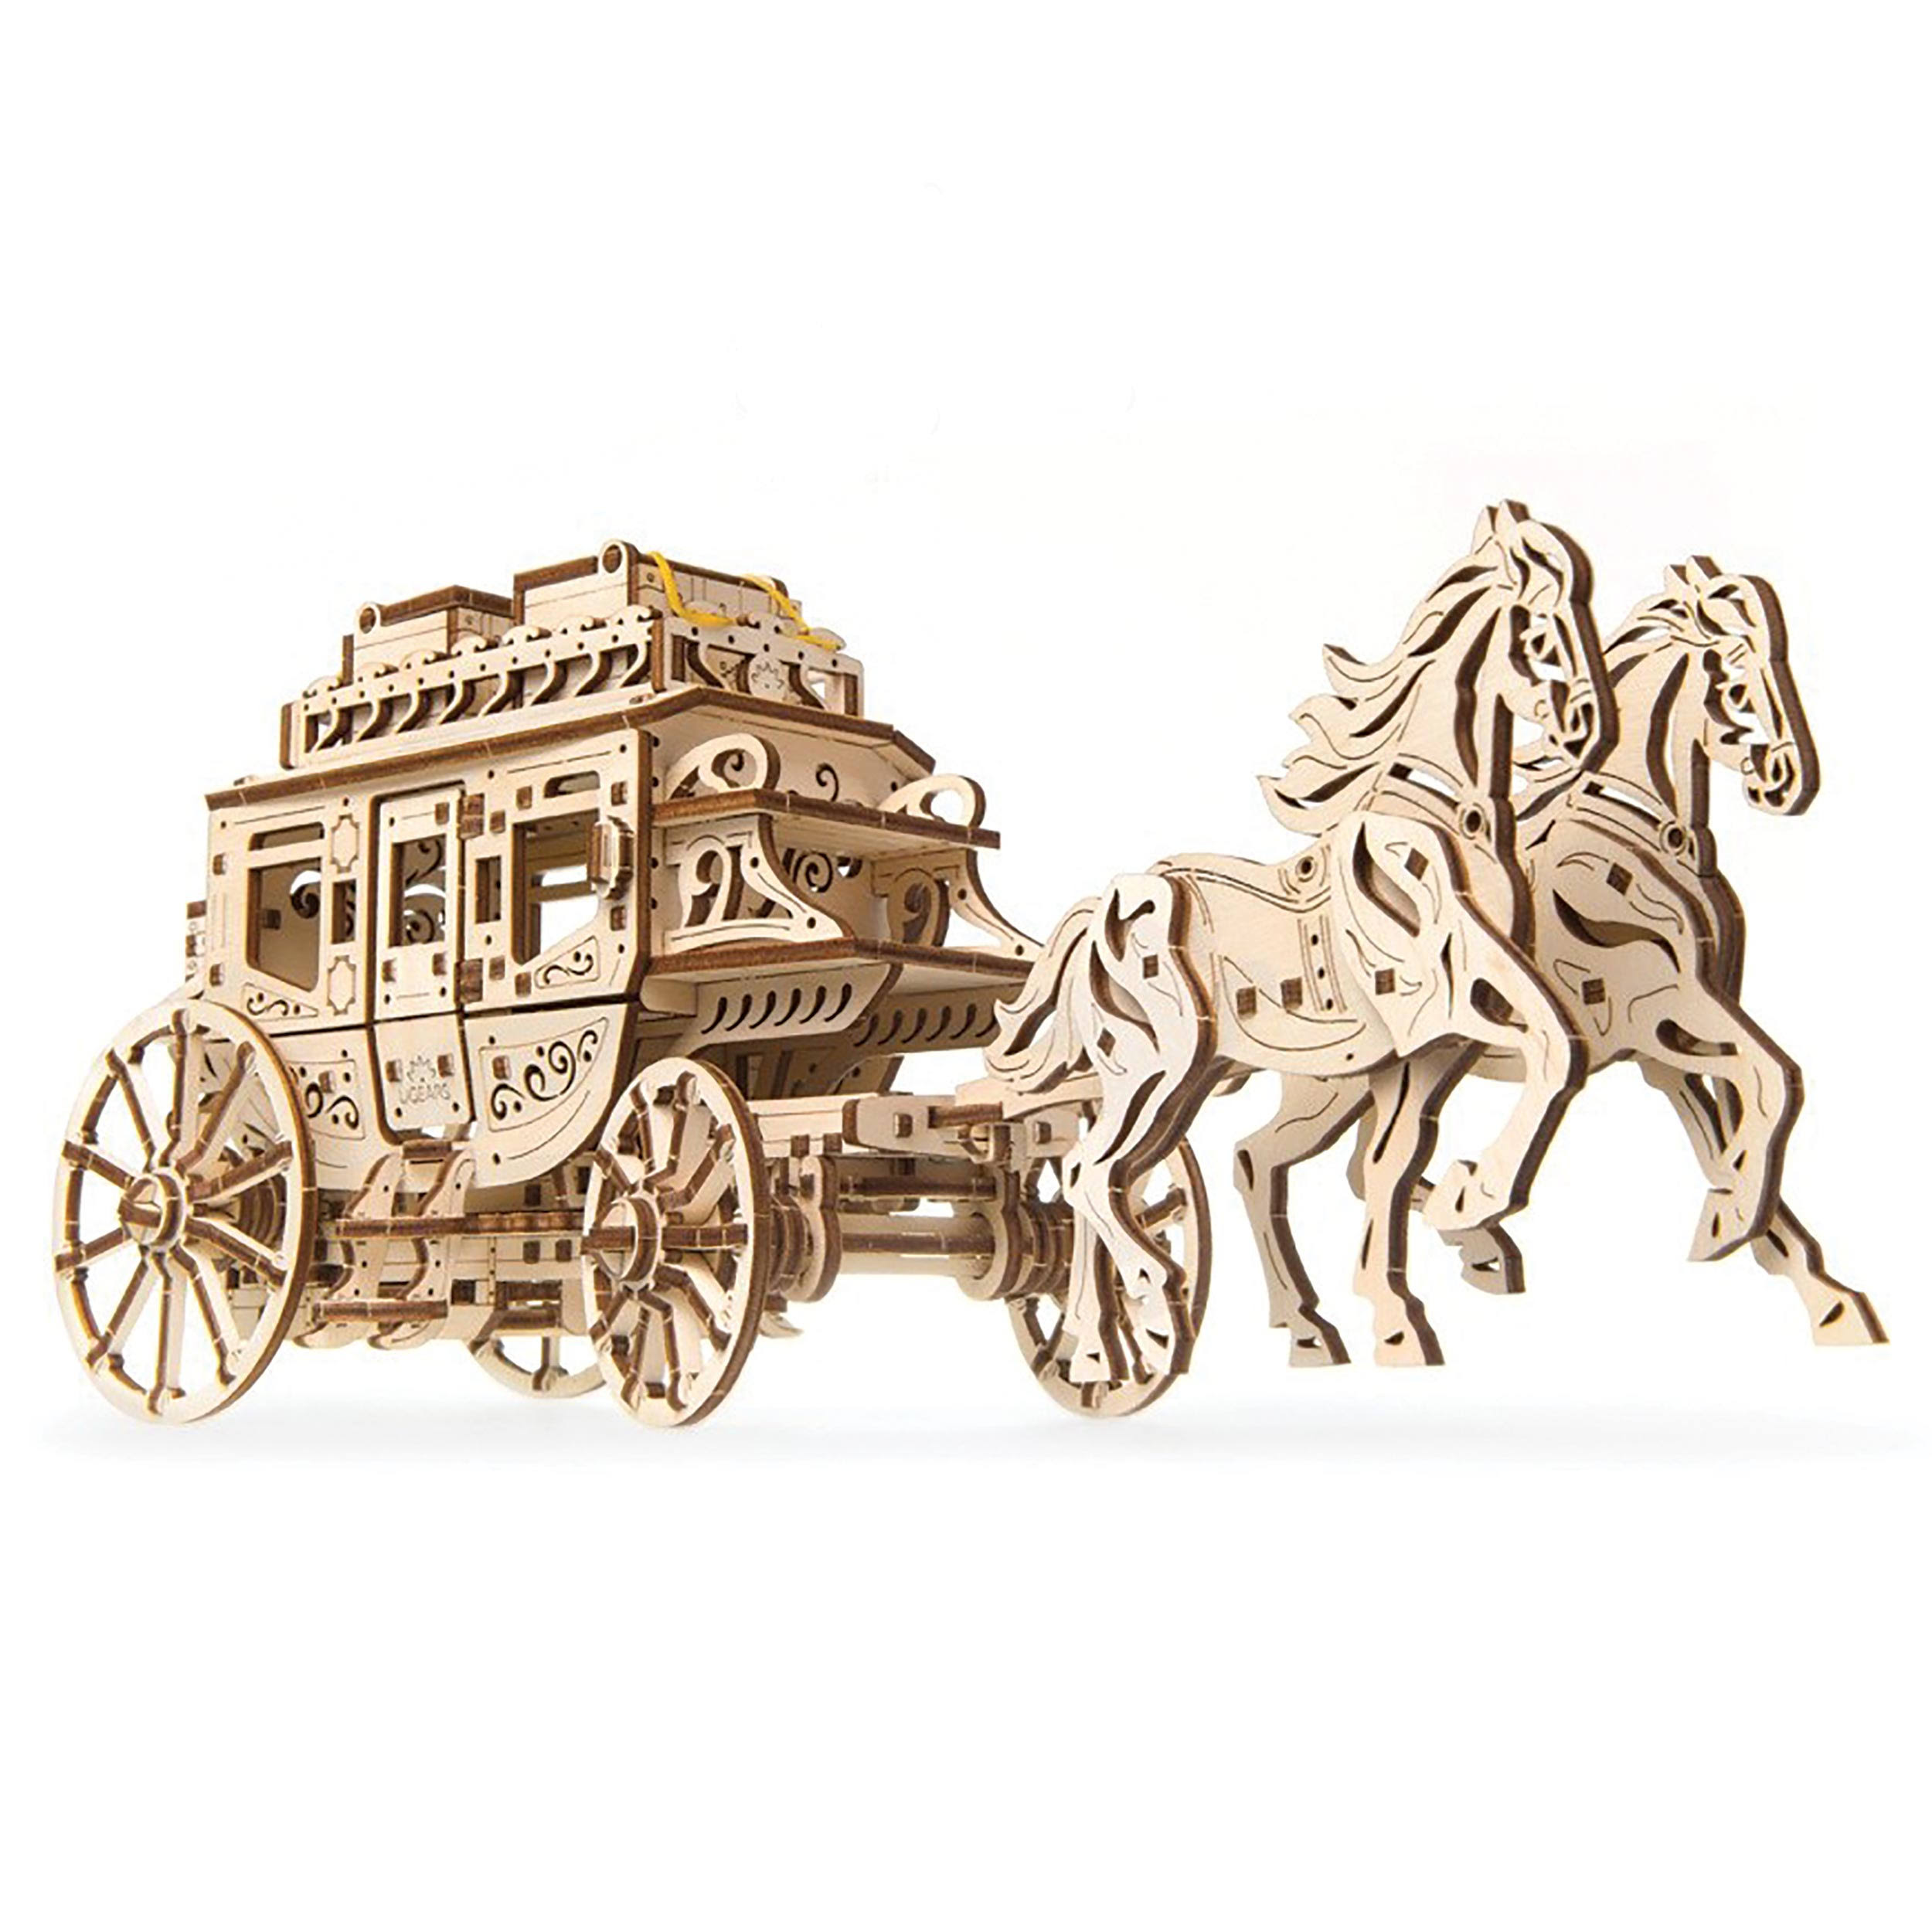 UGears Stagecoach Mechanical Model